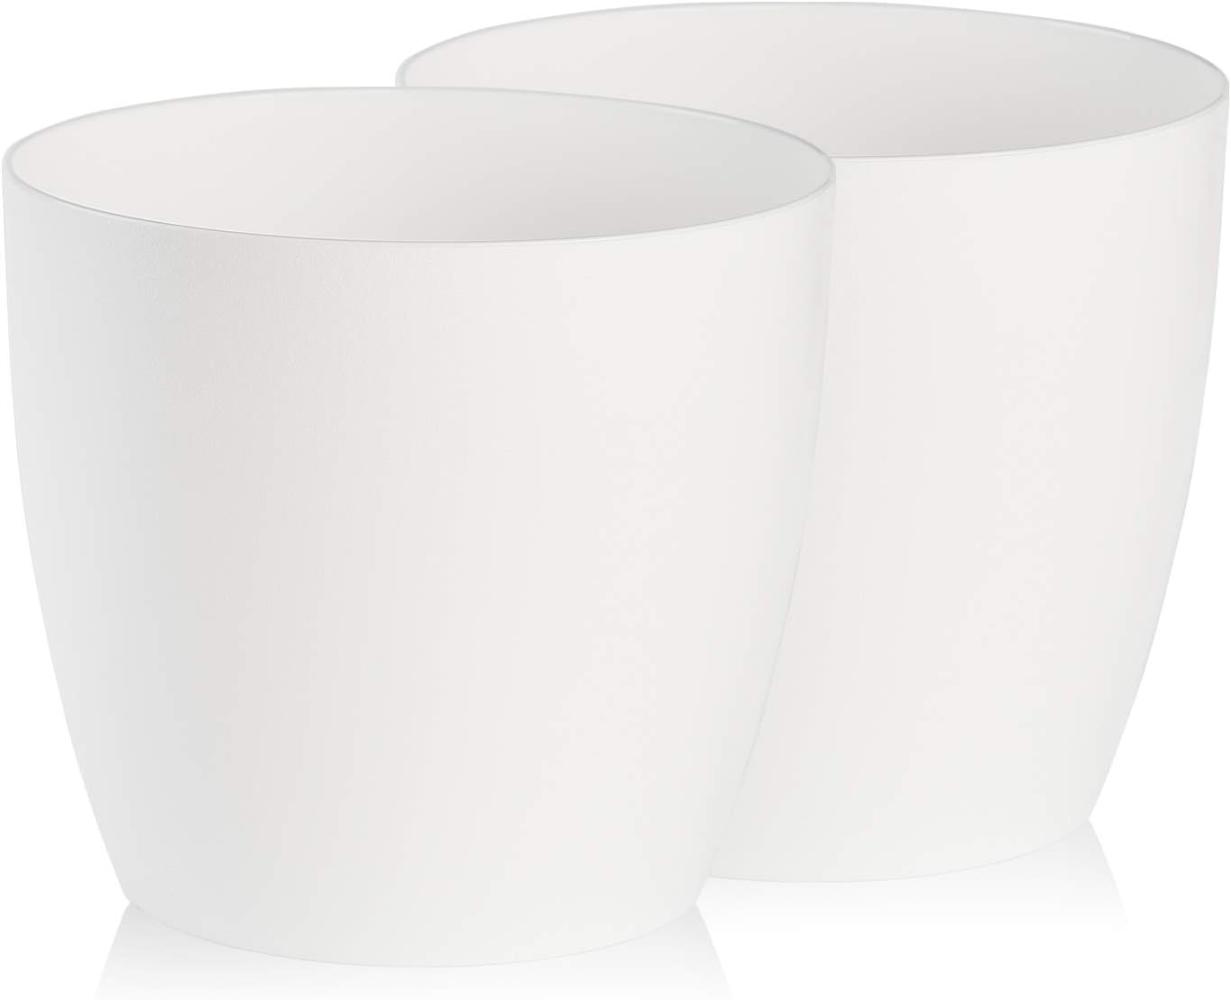 Tymar Blumentopf, 2er-Pack, Pflanzentopf aus Kunststoff, Moderne, matt, Runde Form (ø 30 cm, (2pack) Weiß) Bild 1